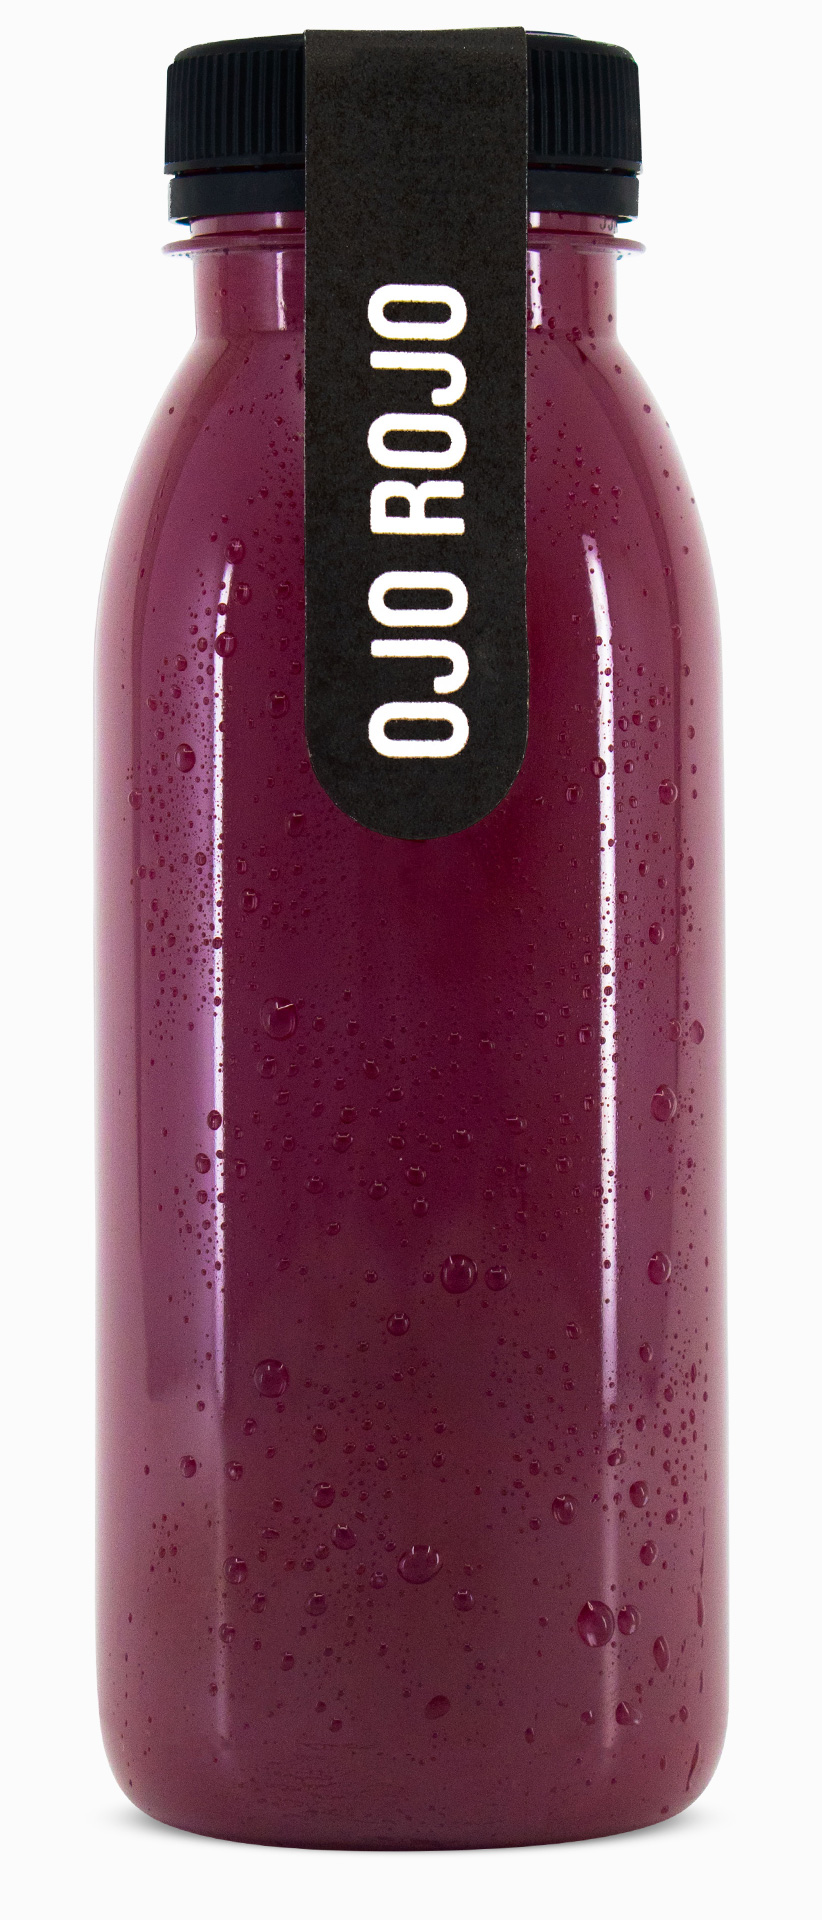 Ojo Rojo – Bio-Smoothie aus Randen, Orange, Apfel in 270ml Glasflasche.